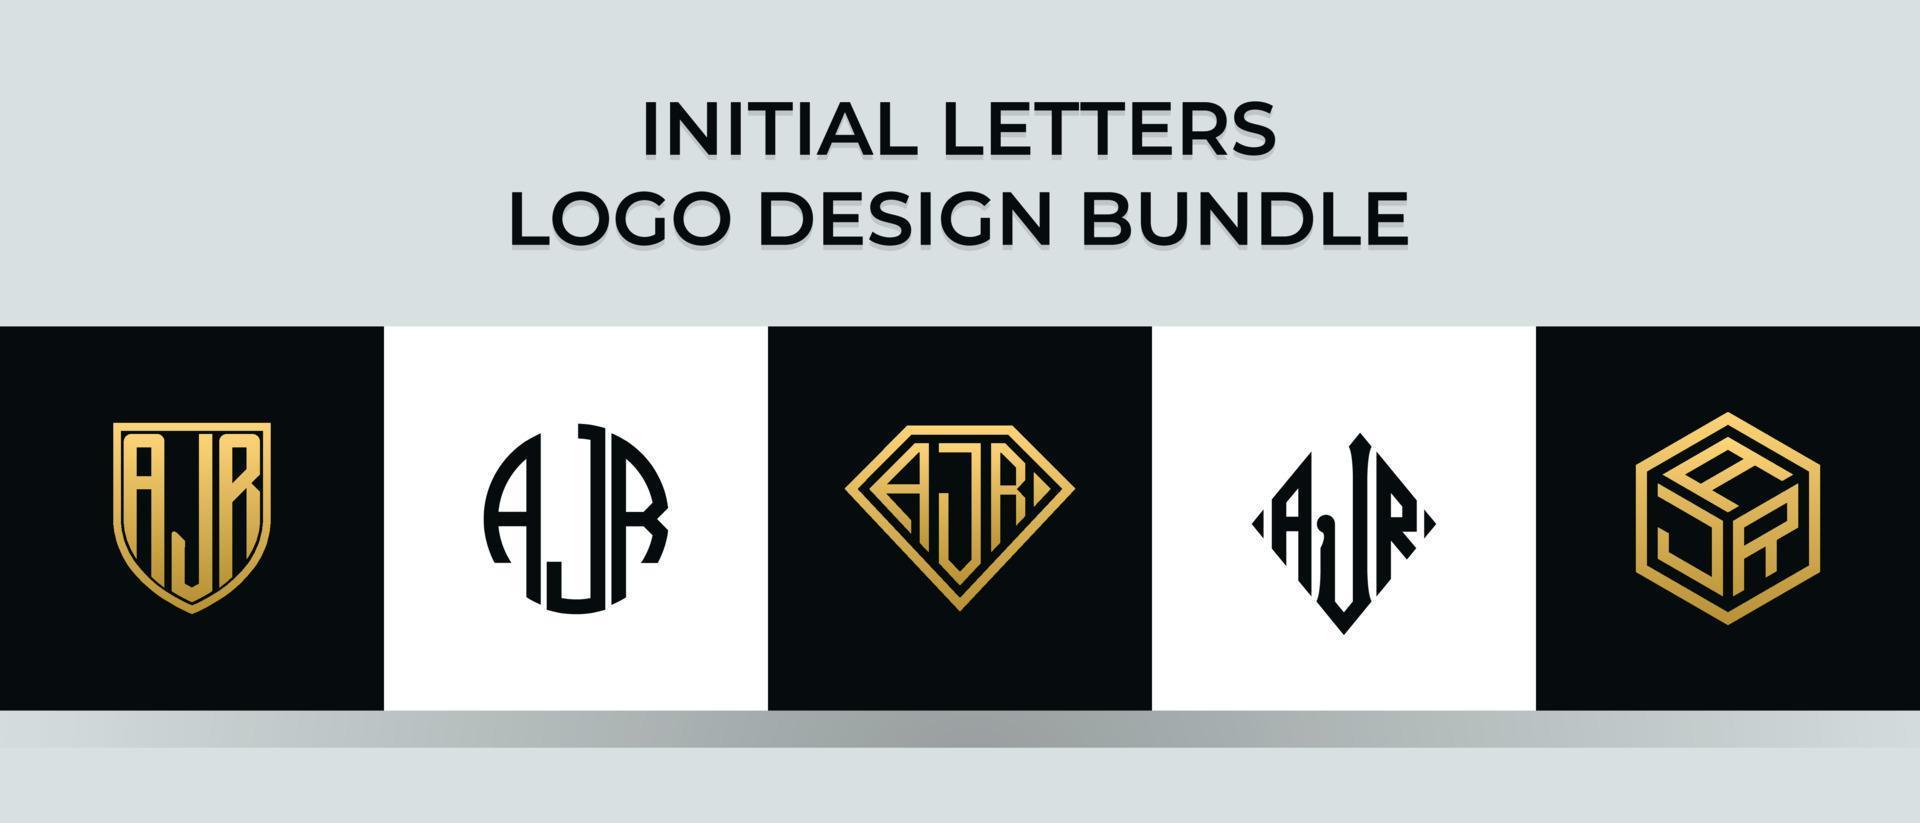 lettere iniziali ajr logo design bundle vettore